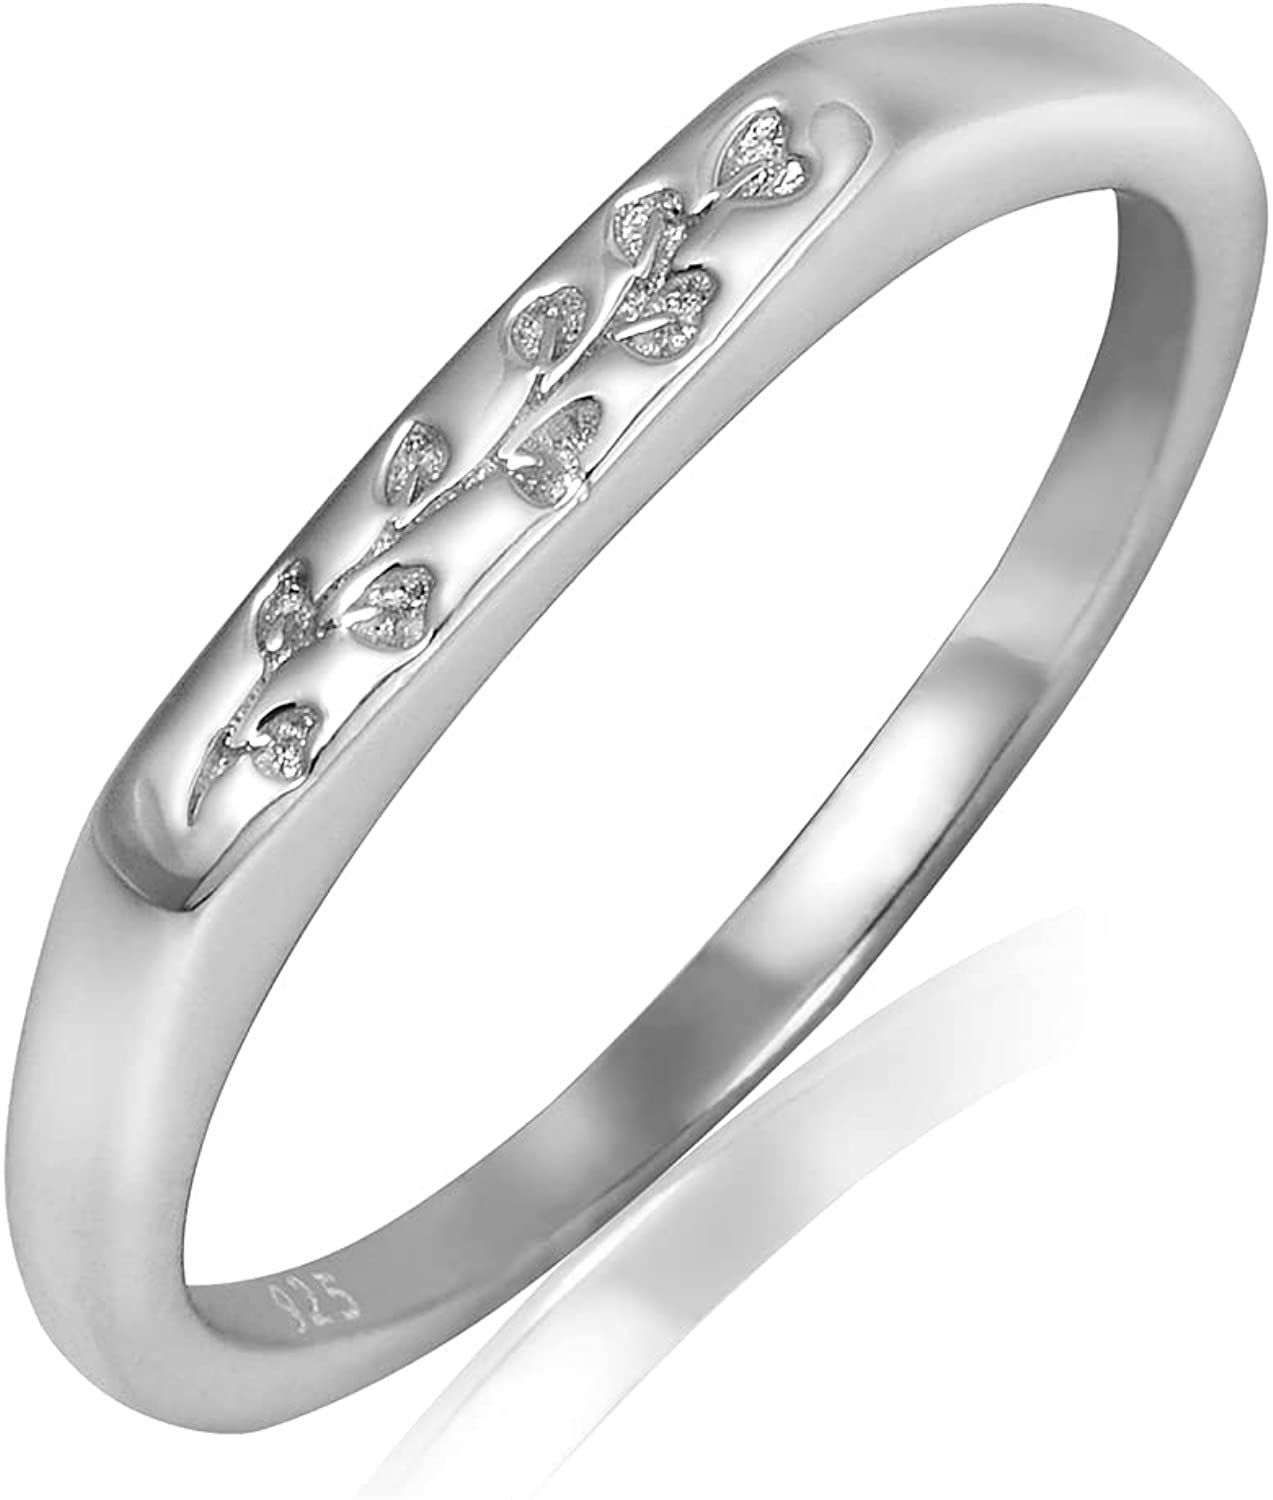 YeGieonr Handmade Flower Signet Ring -Minimalistic Statement Ring with Botanical Engraved- Delica... | Amazon (US)